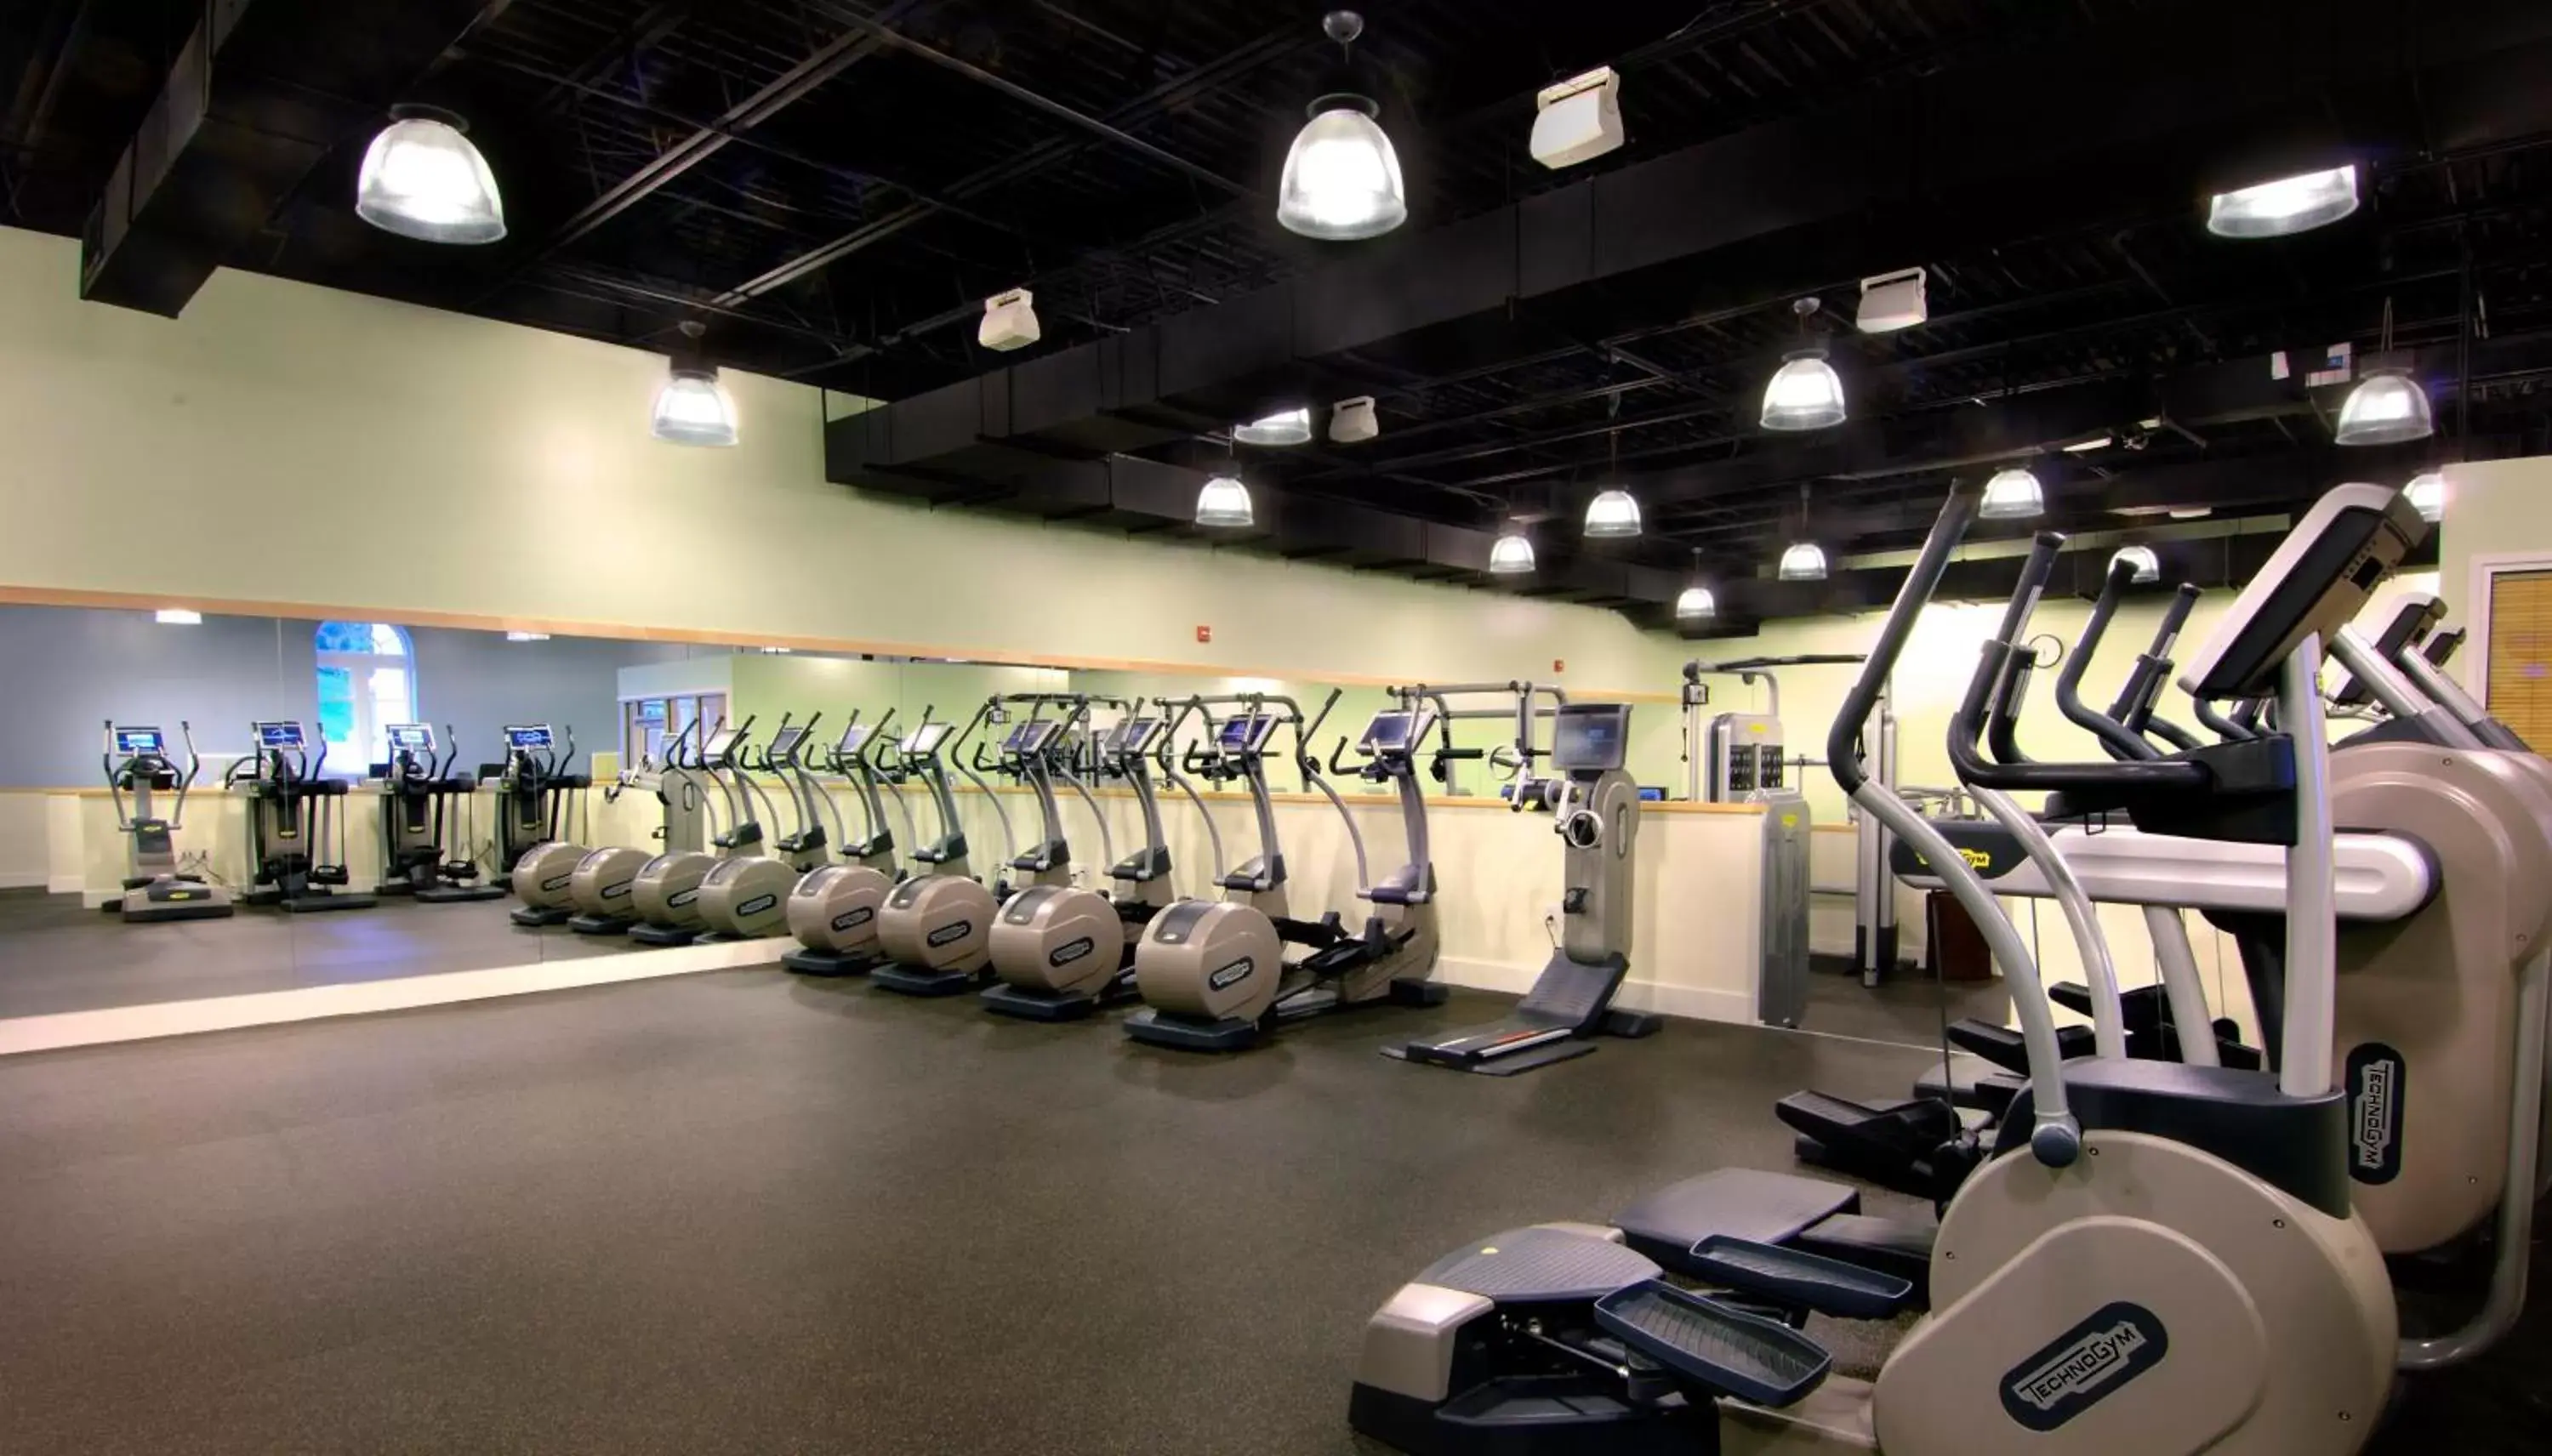 Fitness centre/facilities, Fitness Center/Facilities in The Omni Homestead Resort